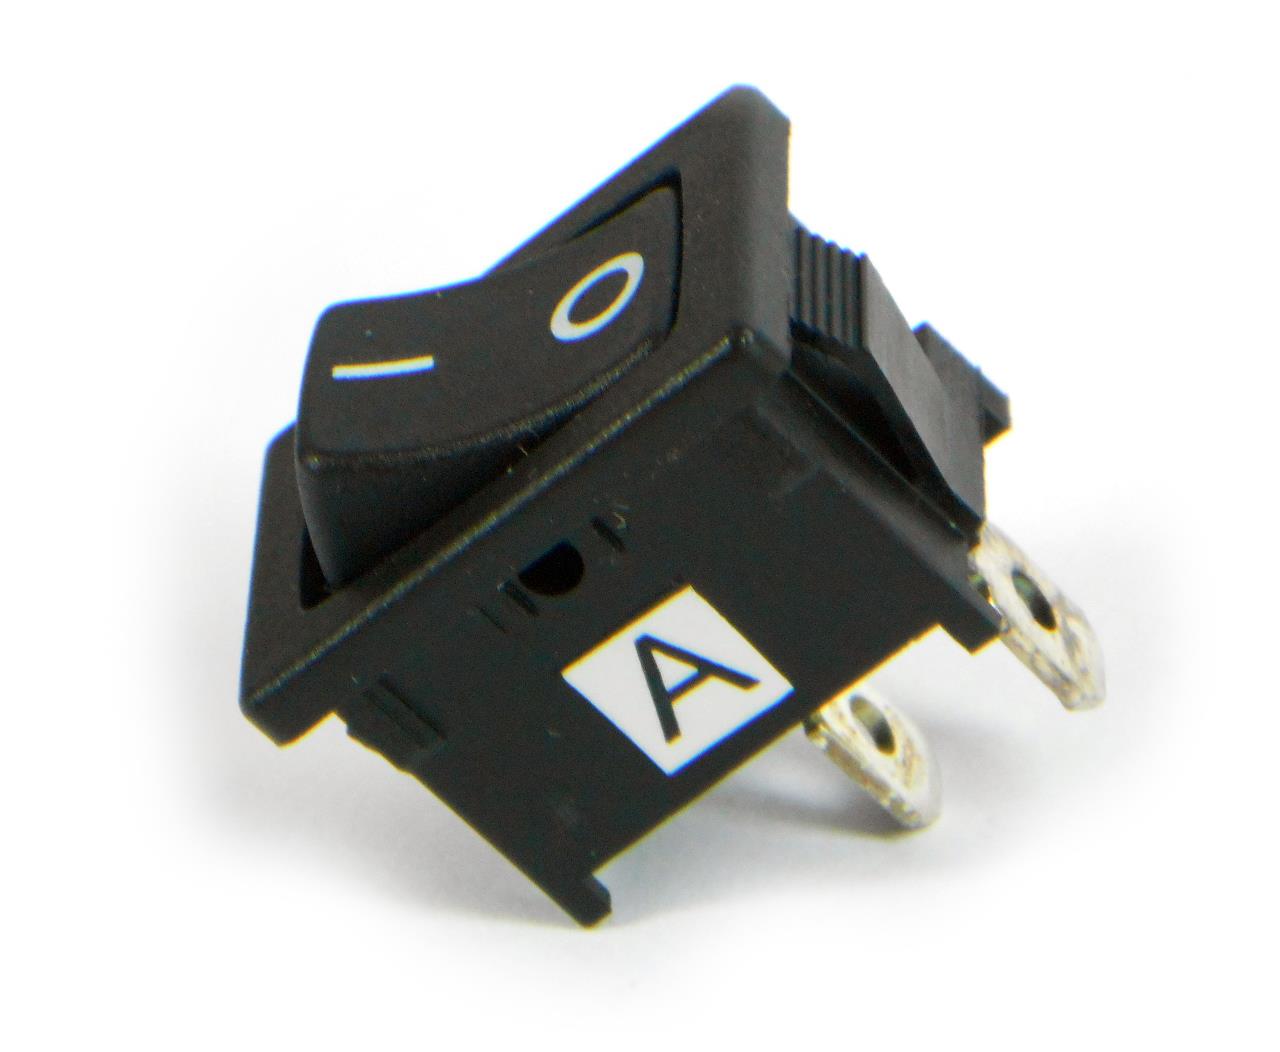 Interruptores de Tecla - Interruptor simples tecla gravada